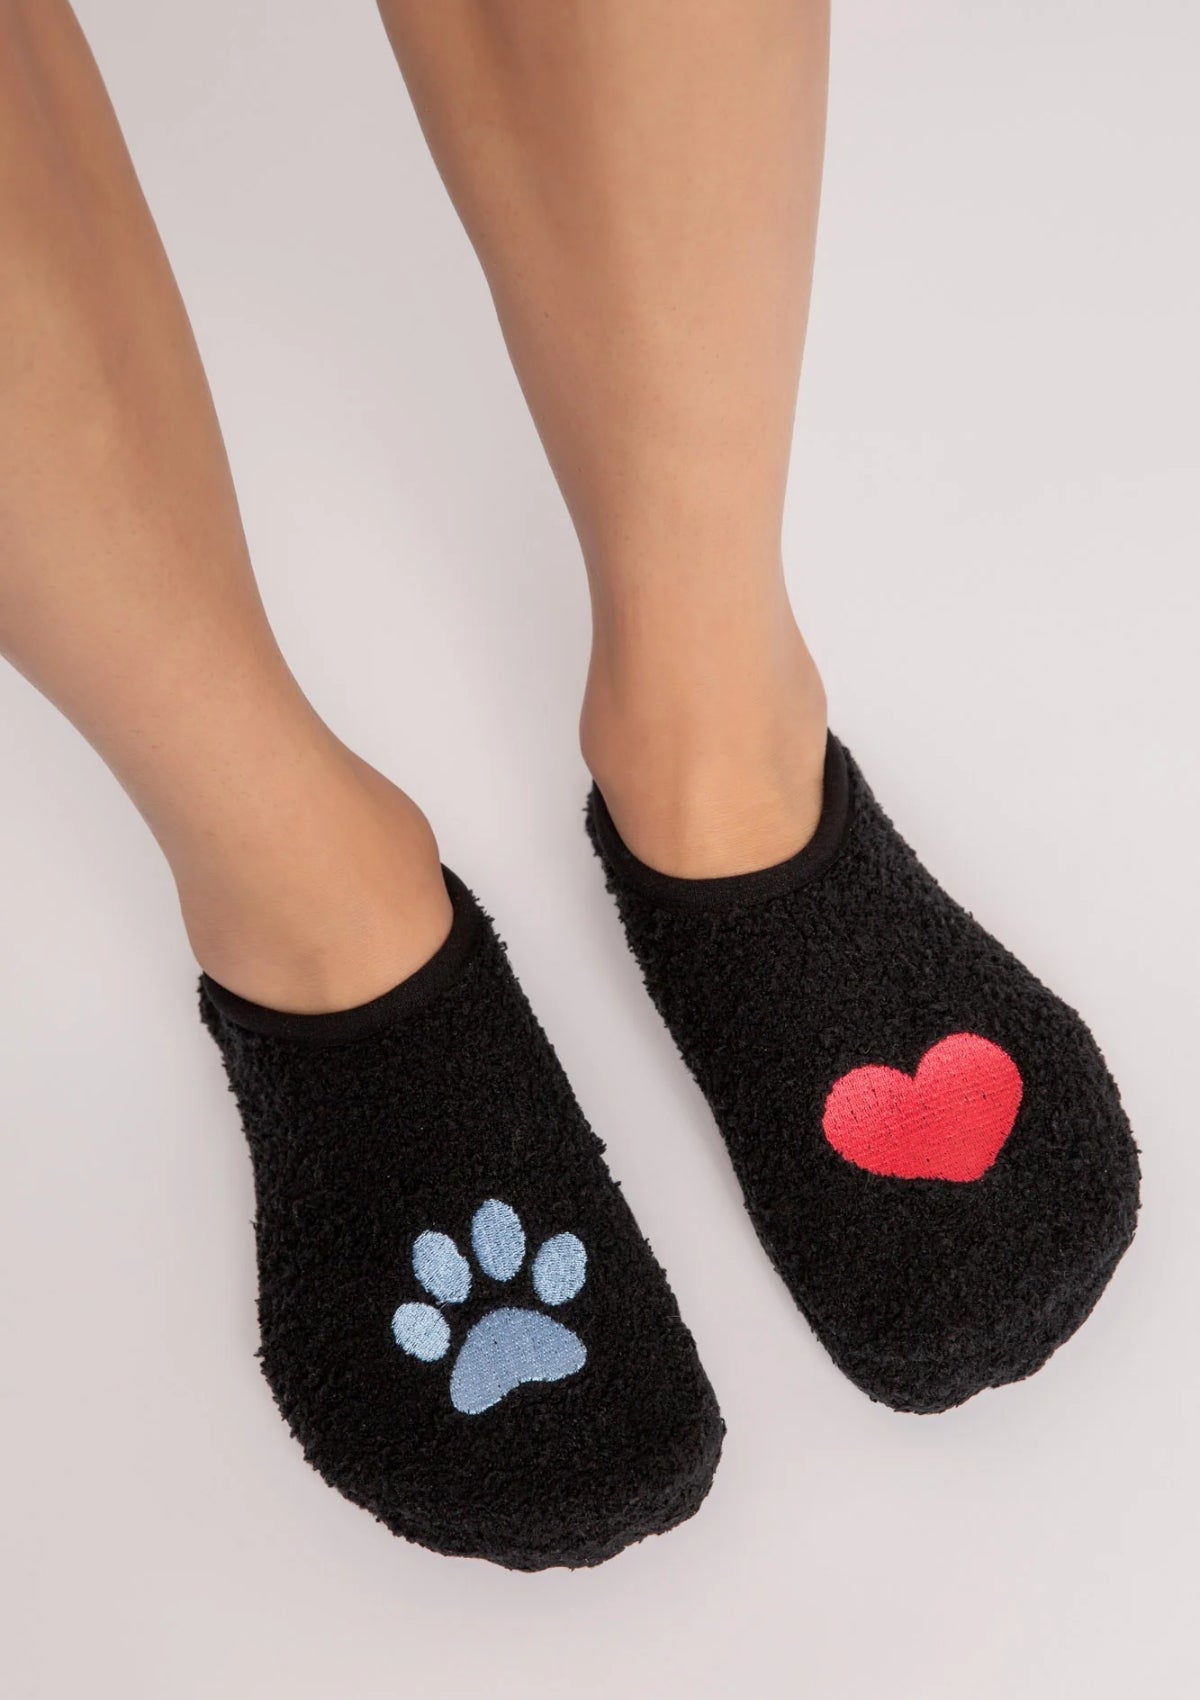 Fun Socks - Black, One Size -P.J.Salvage- Ruby Jane-